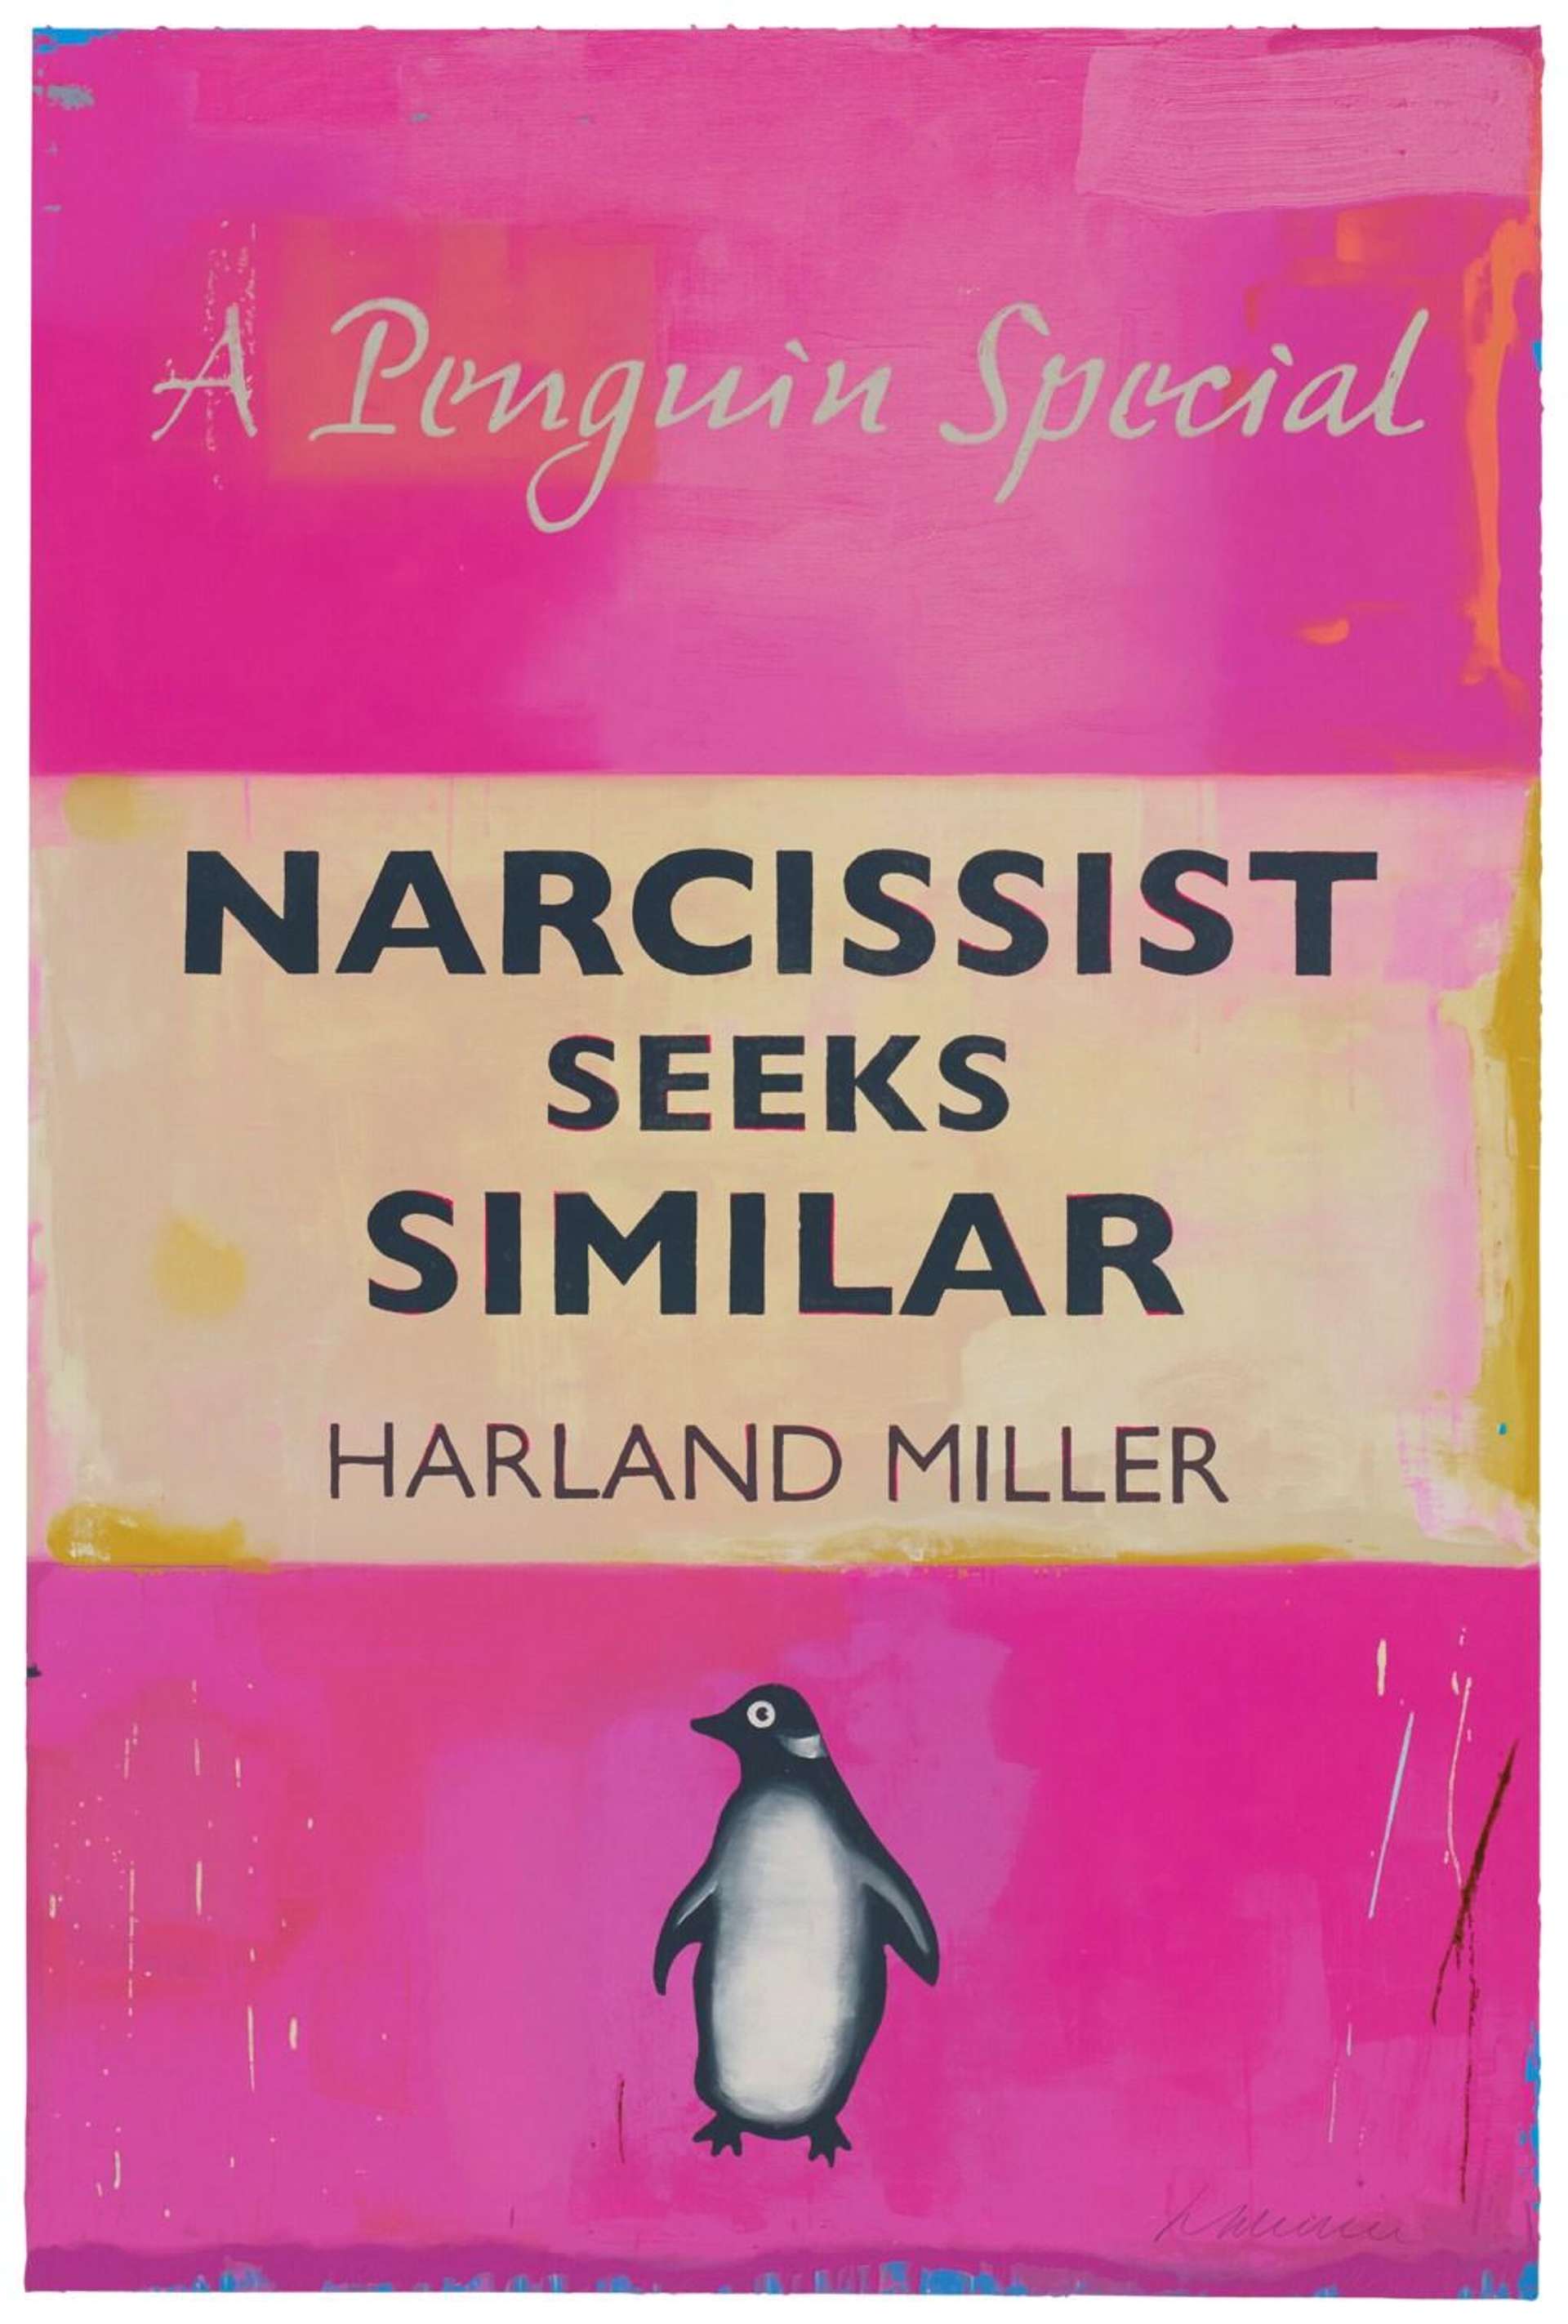 Narcissist Seeks Similar (small) - Signed Print by Harland Miller 2021 - MyArtBroker